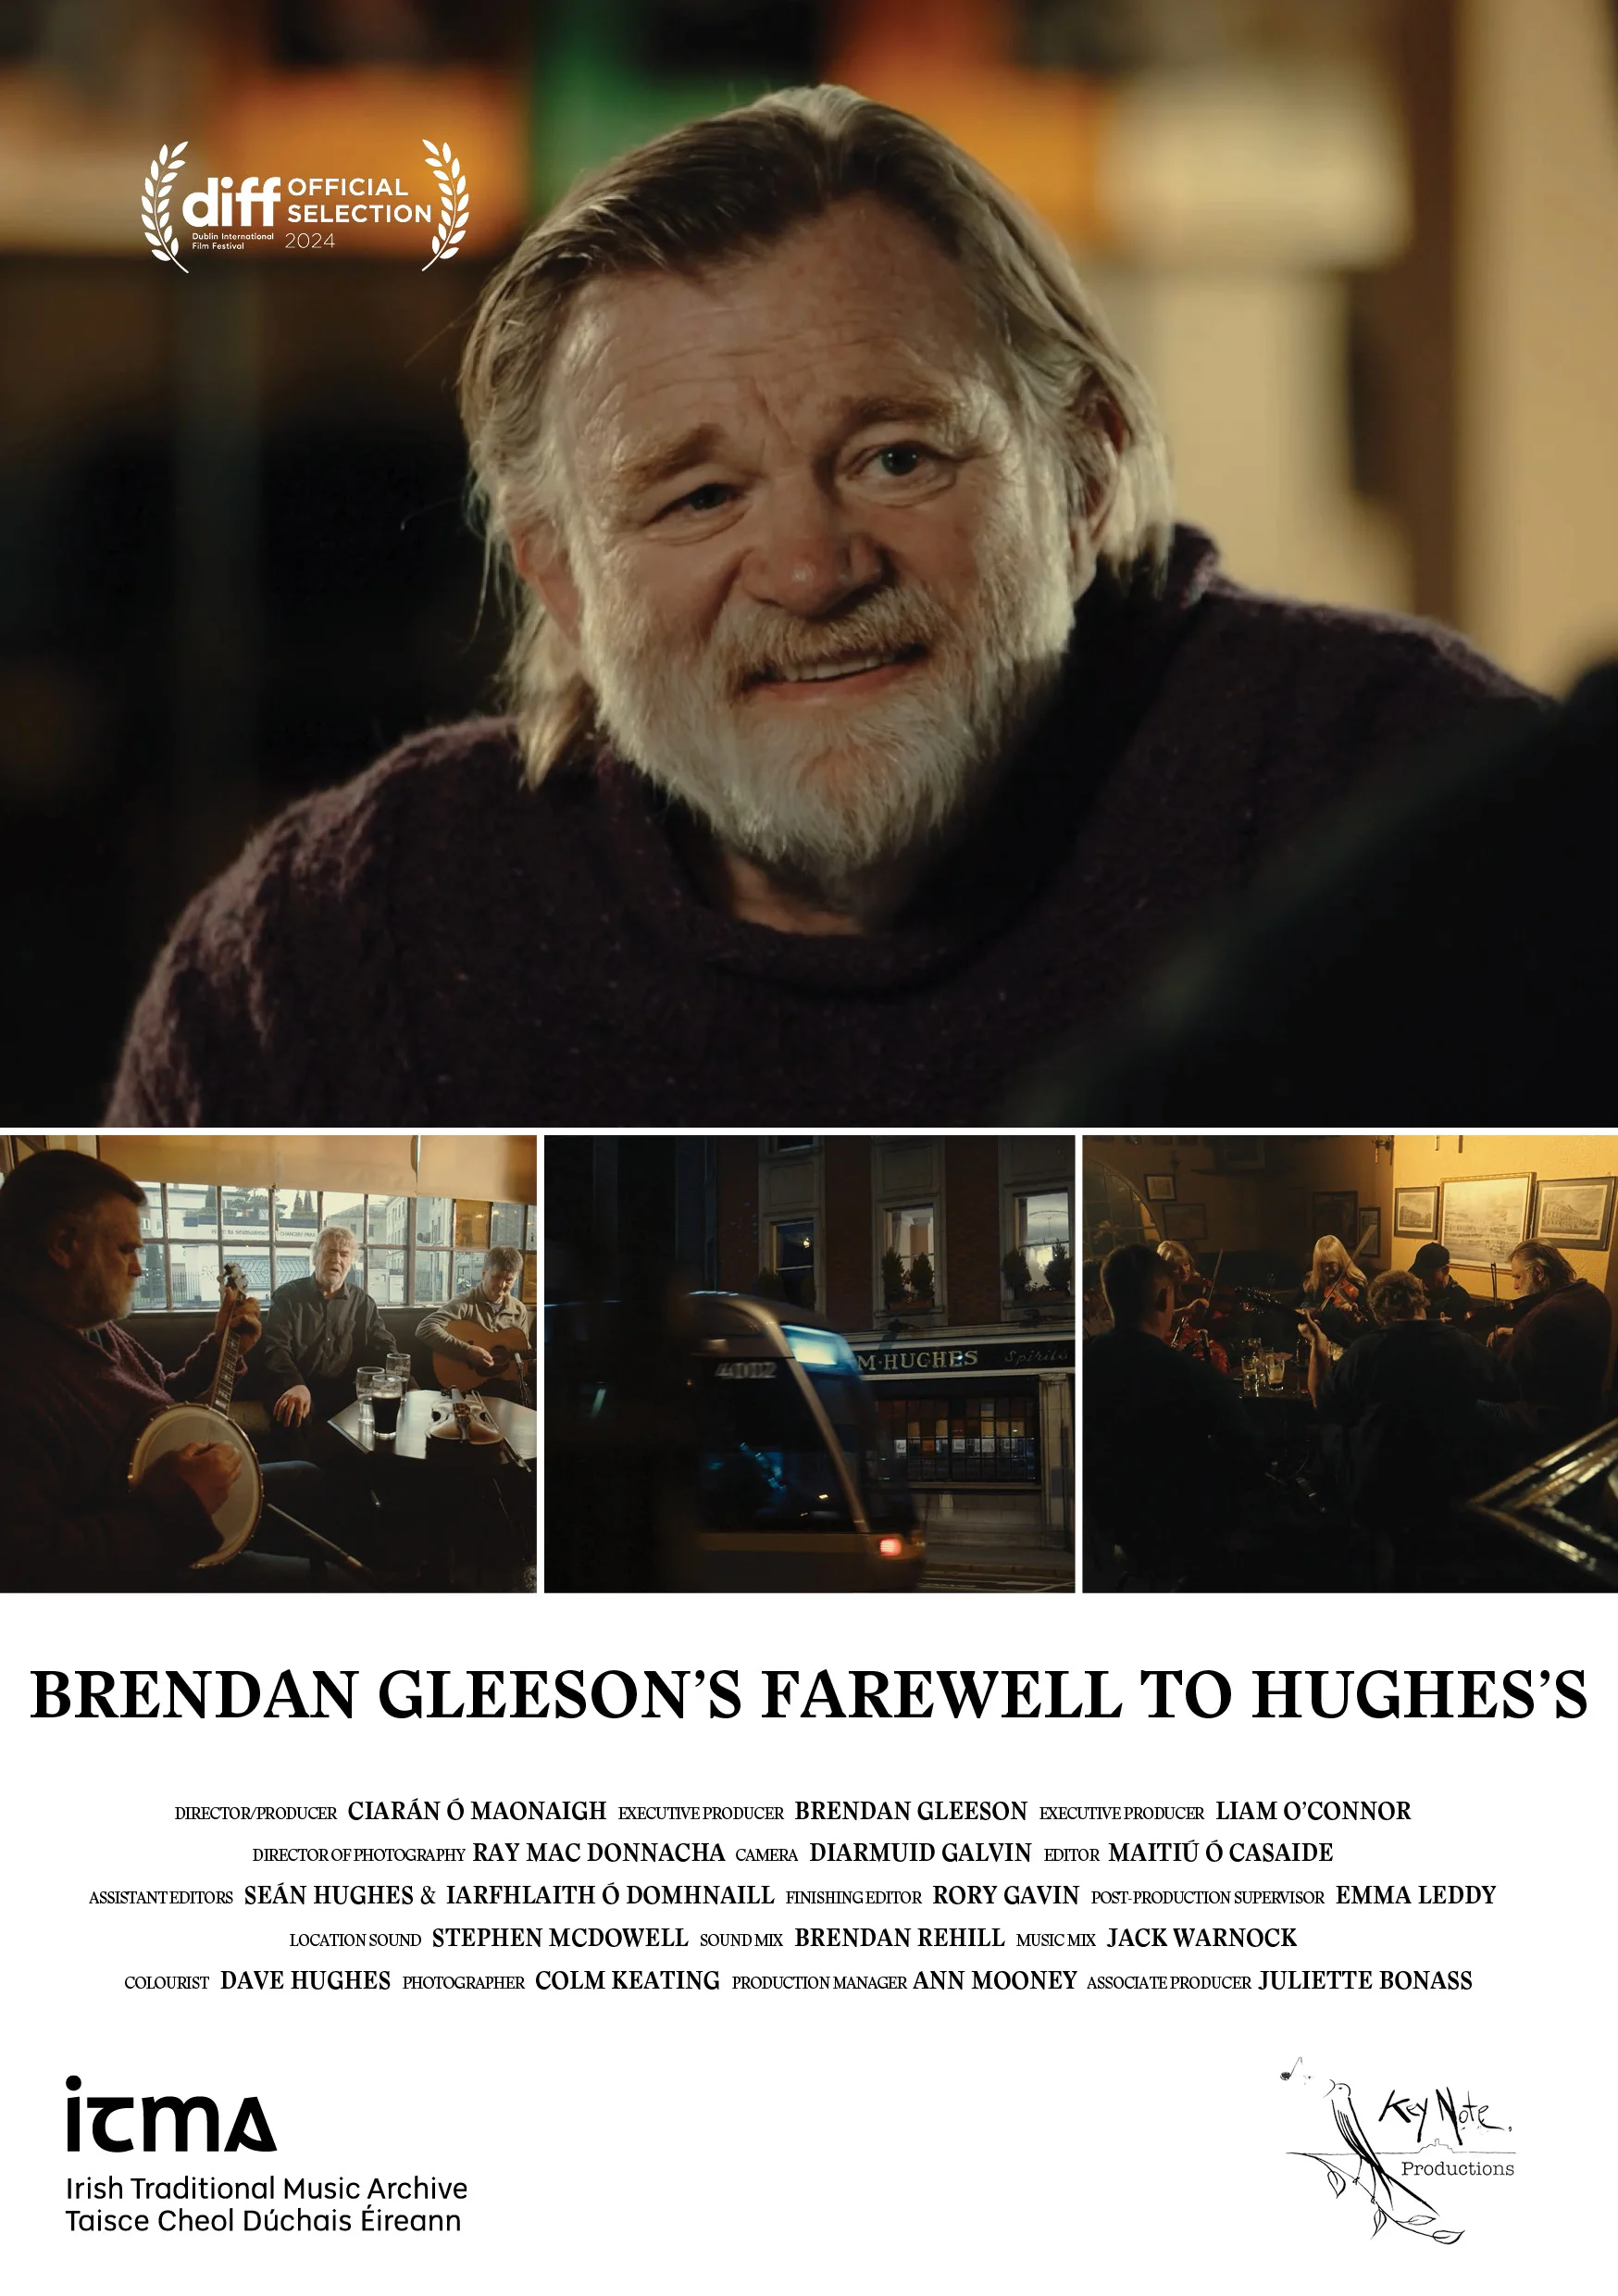 Brendan Gleeson’s Farewell to Hughes